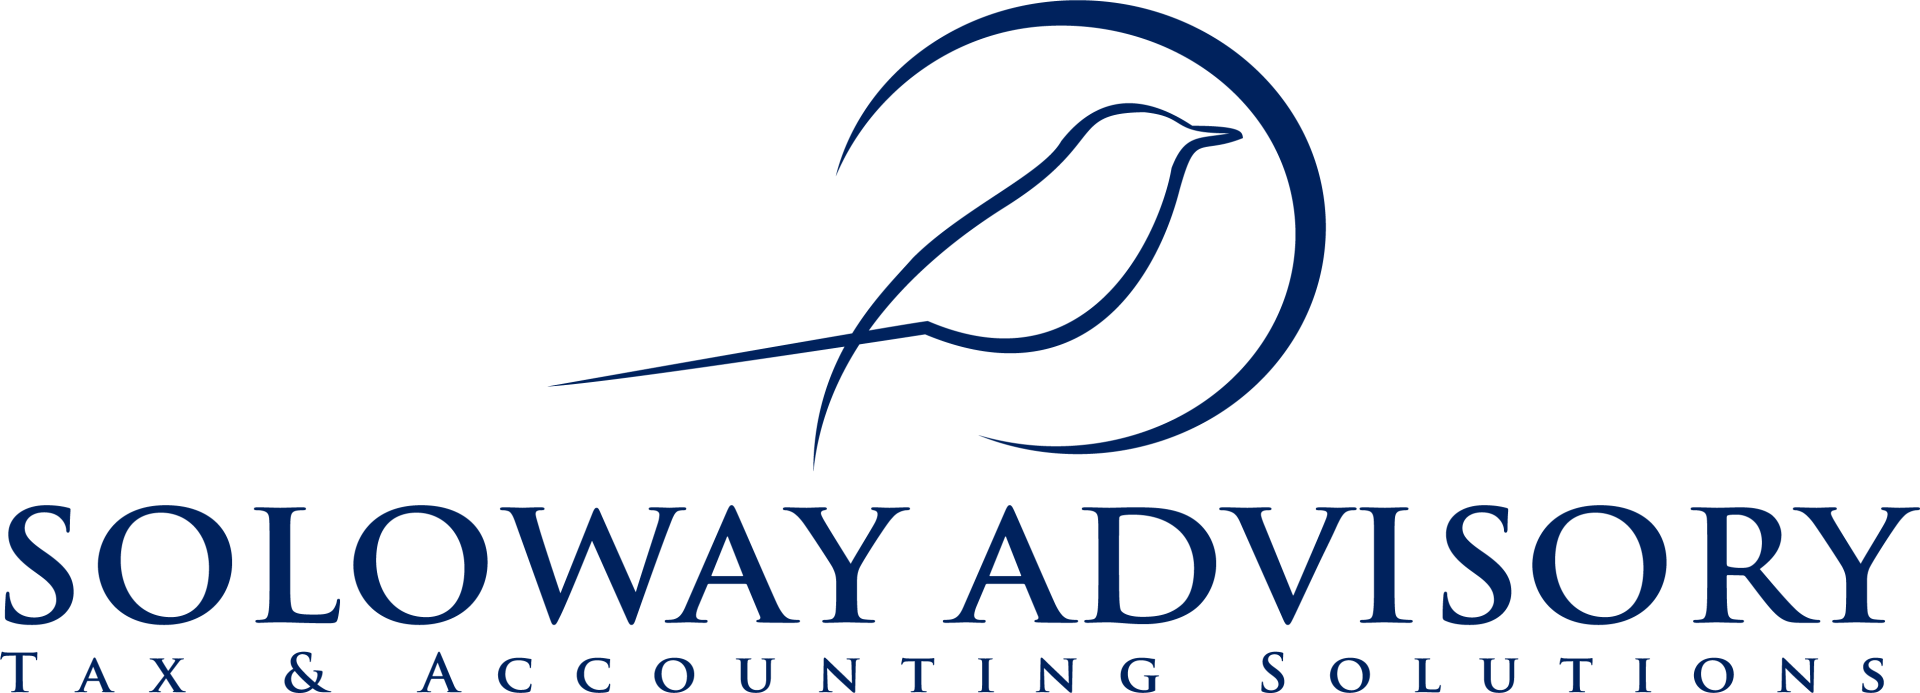 Soloway Advisory Logo Tax Preparation and Accountant in Port Jefferson Station, NY